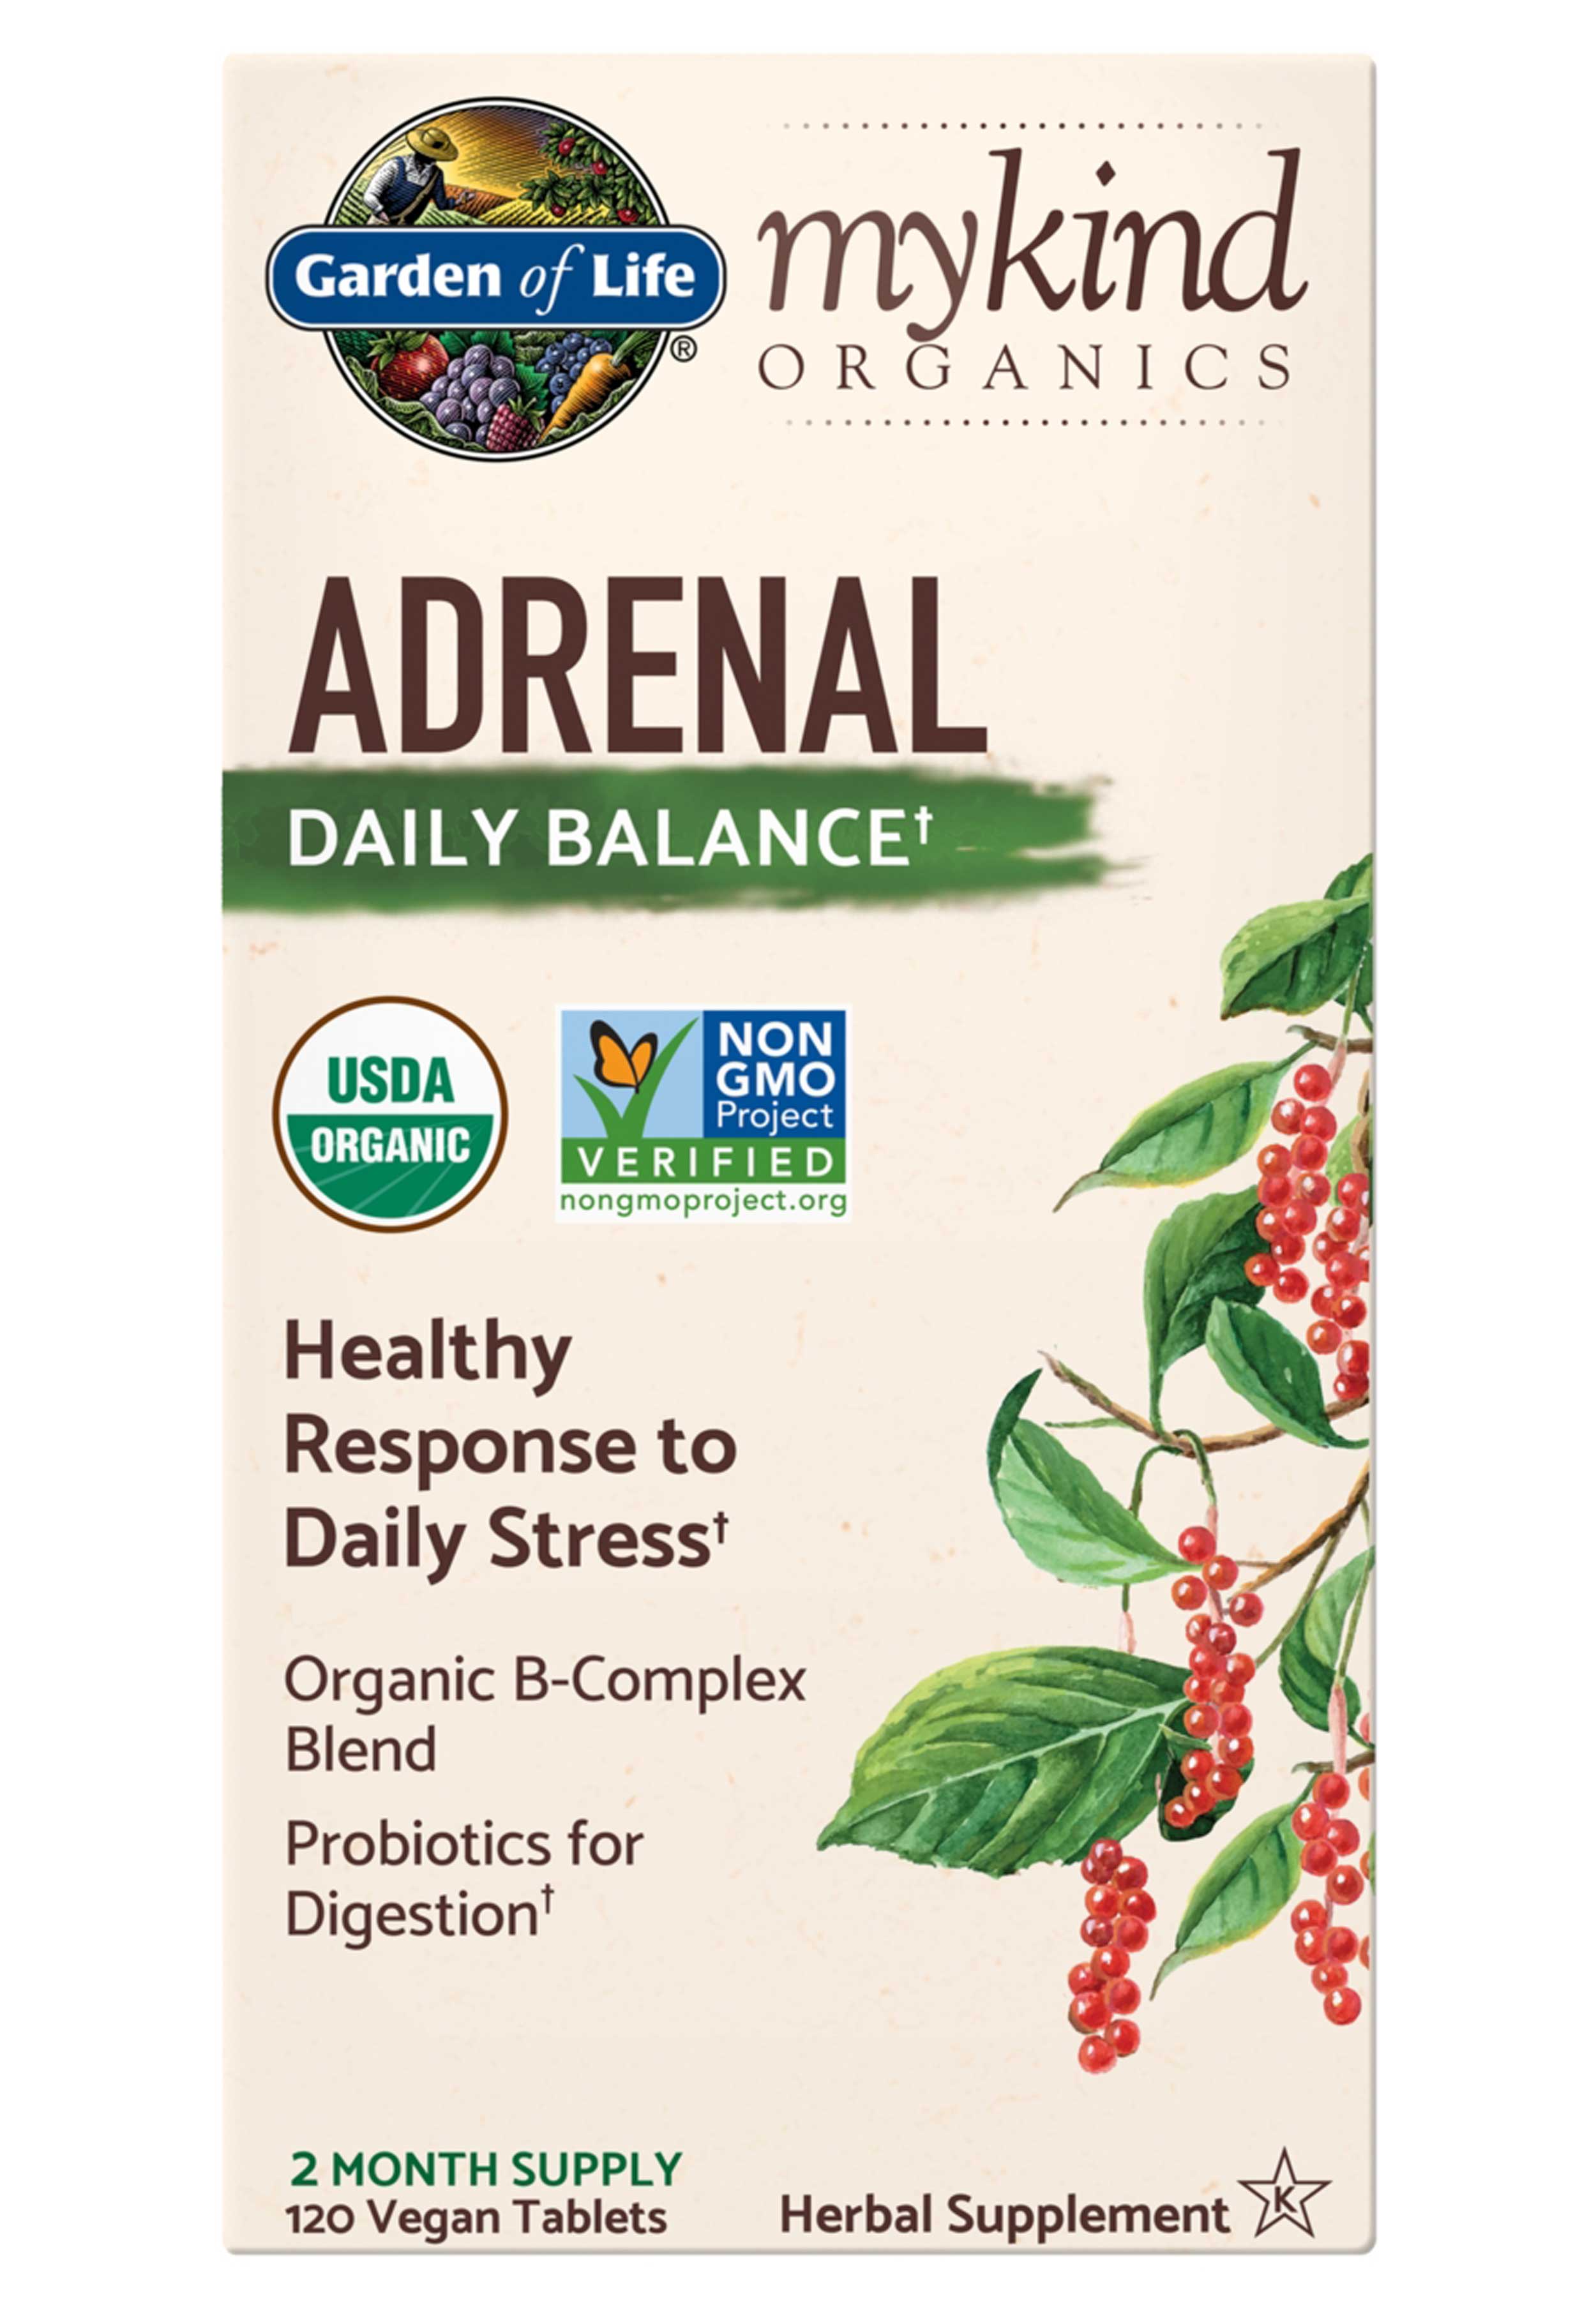 Garden of Life mykind Organics Adrenal Daily Balance